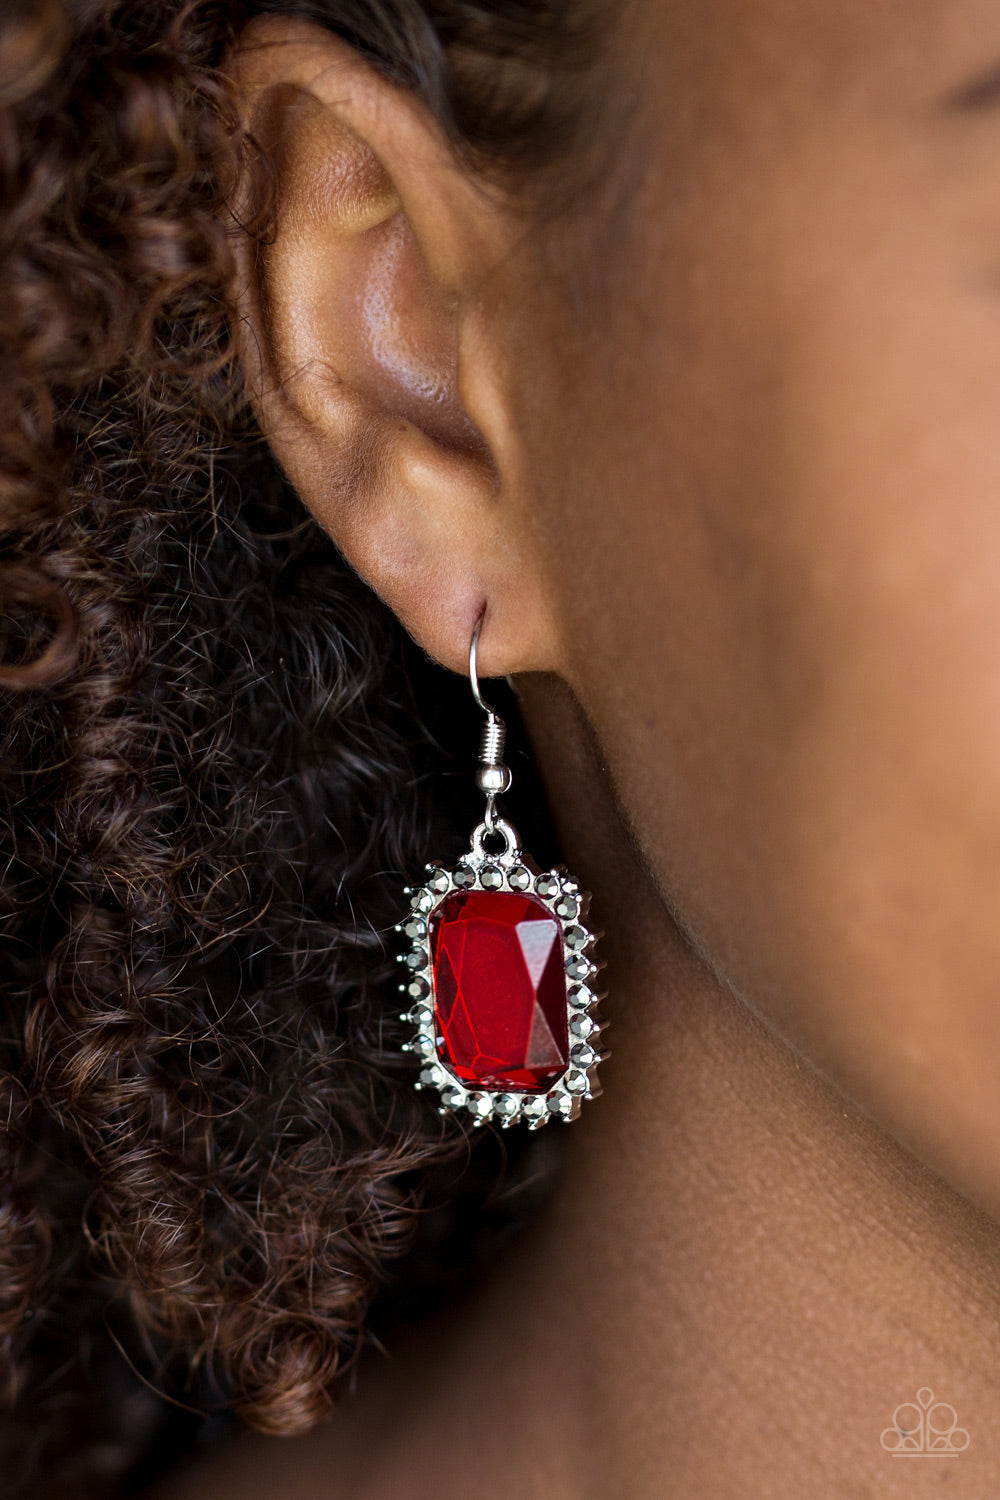 Paparazzi Downtown Dapper - Red - Emerald Cut Gems - Hematite Rhinestones - Silver Earrings - $5 Jewelry with Ashley Swint